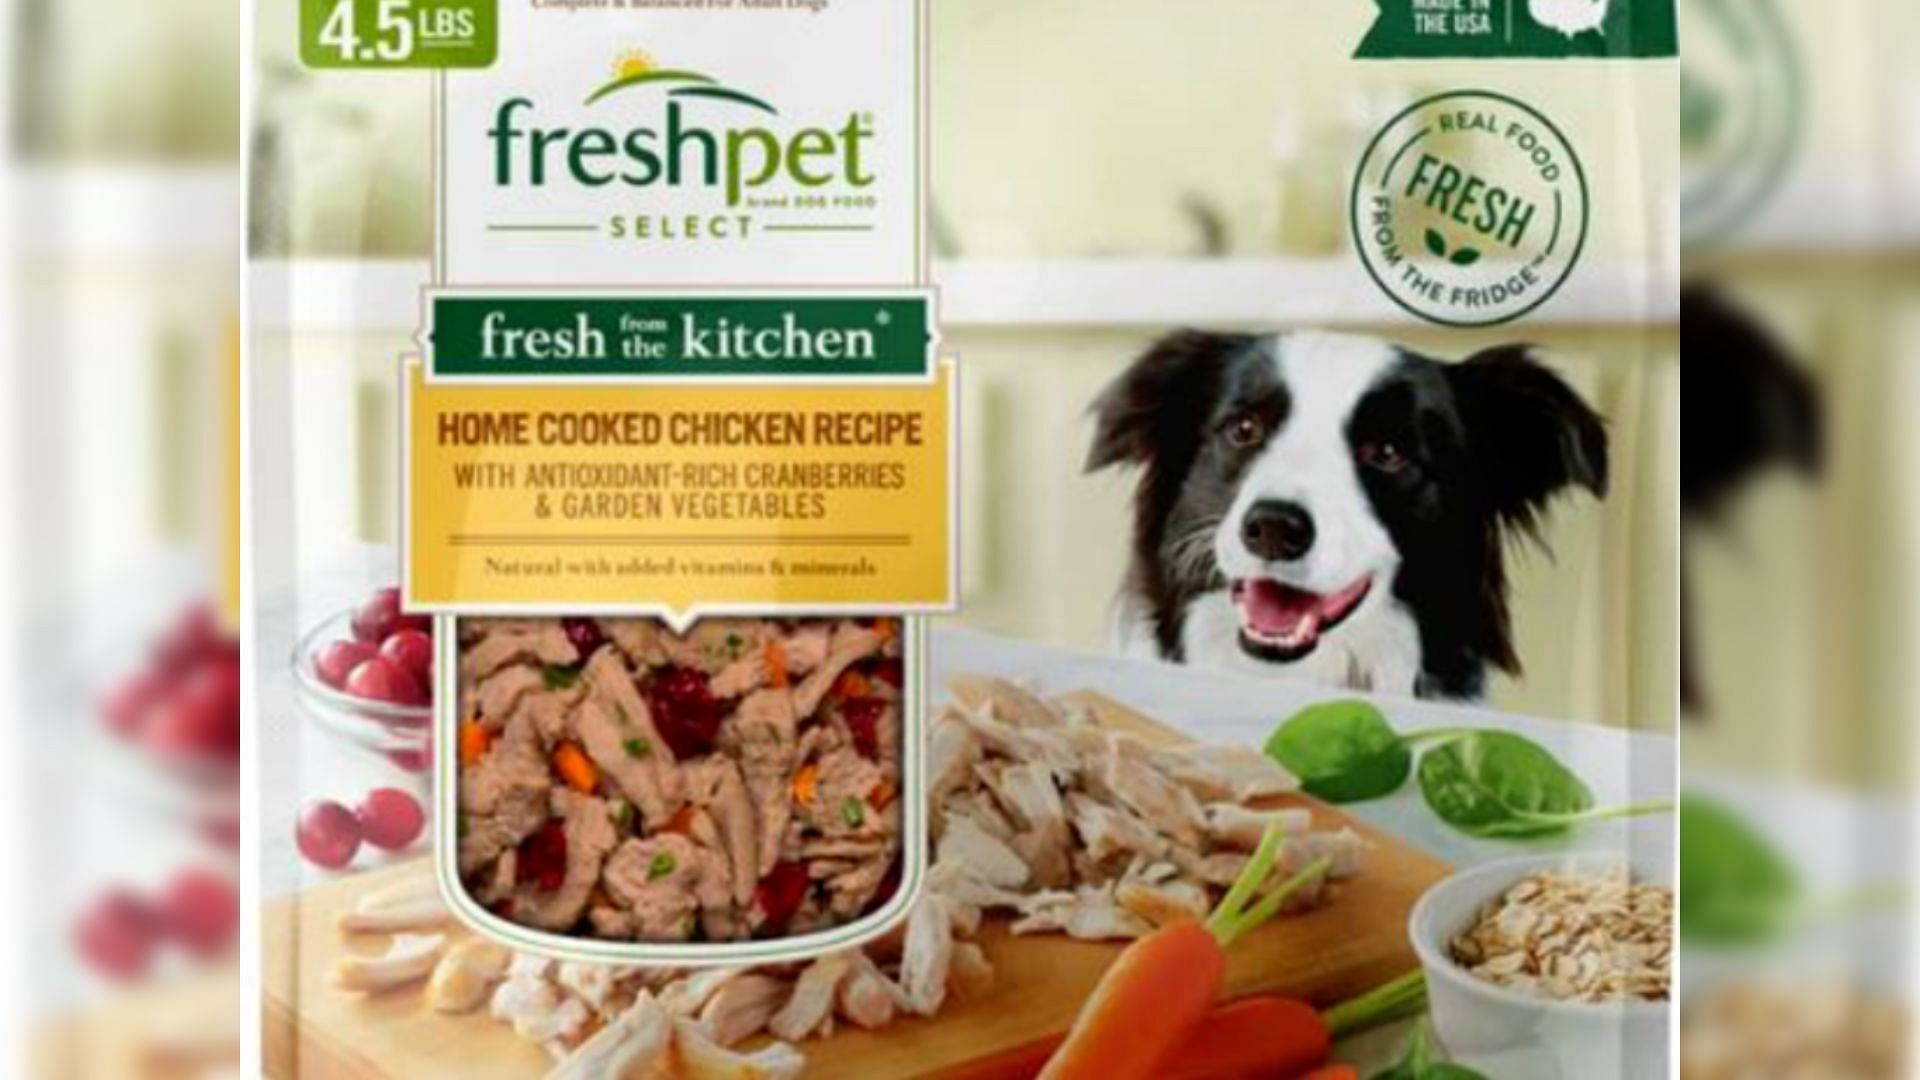 Freshpet dog food recalled amid salmonella fears (Image via FDA)